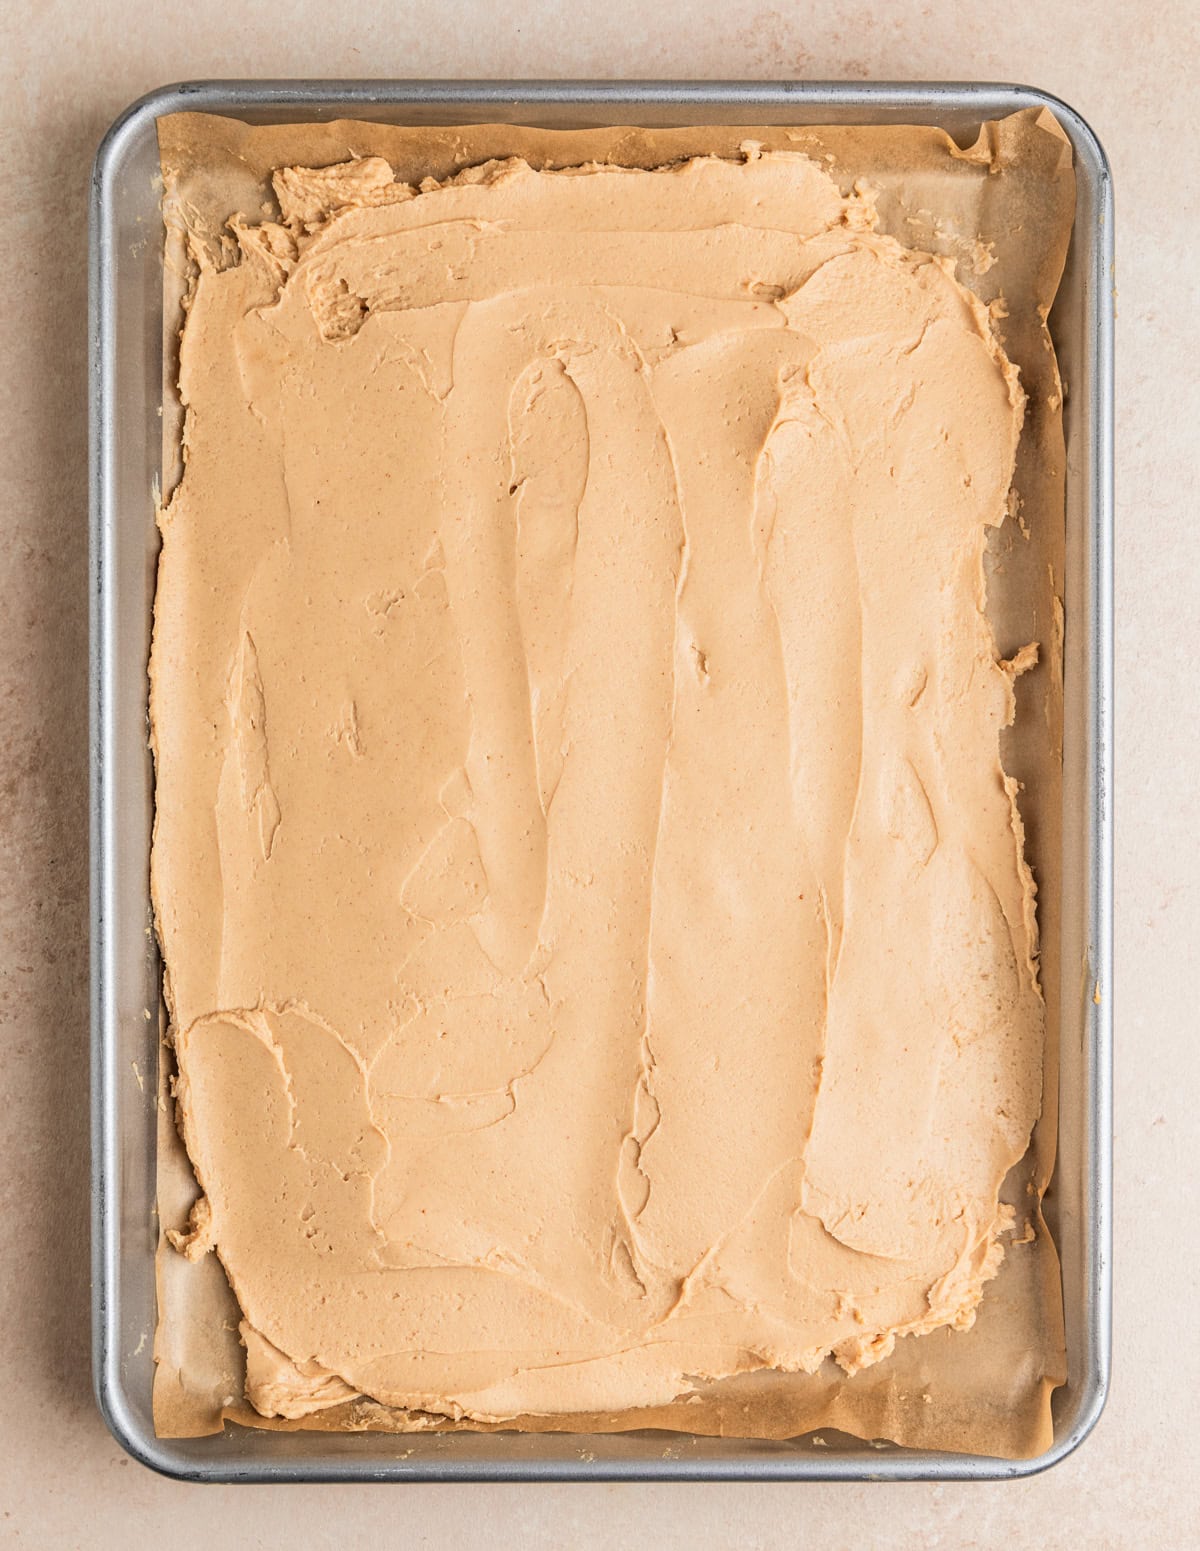 Peanut butter and Greek yogurt mixture spread onto parchment lined baking sheet.